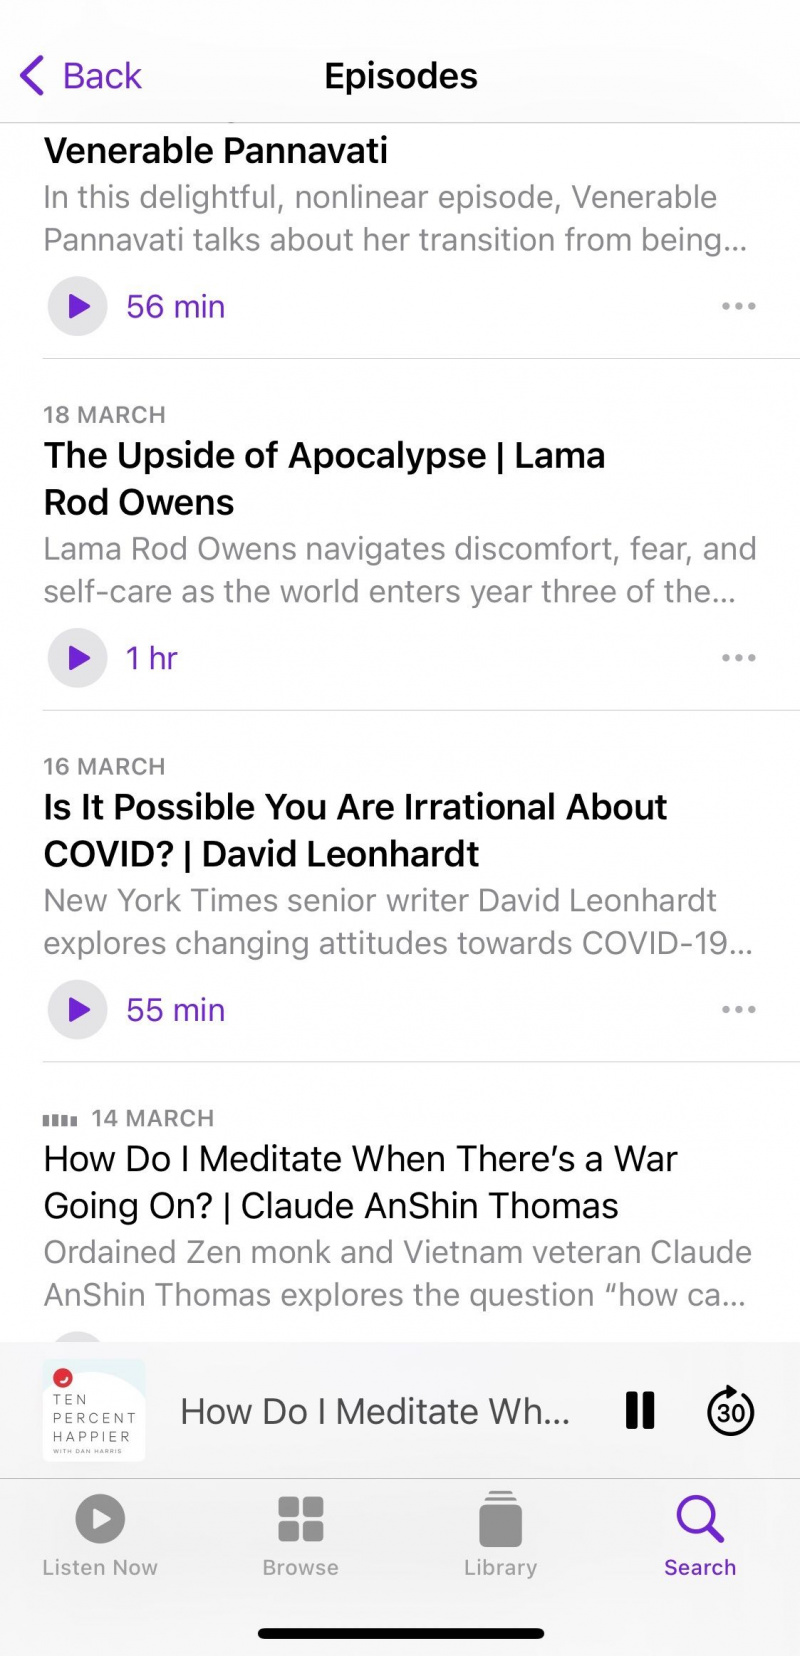   Captura de tela mostrando episódios de amostra do podcast Ten Percent Happier